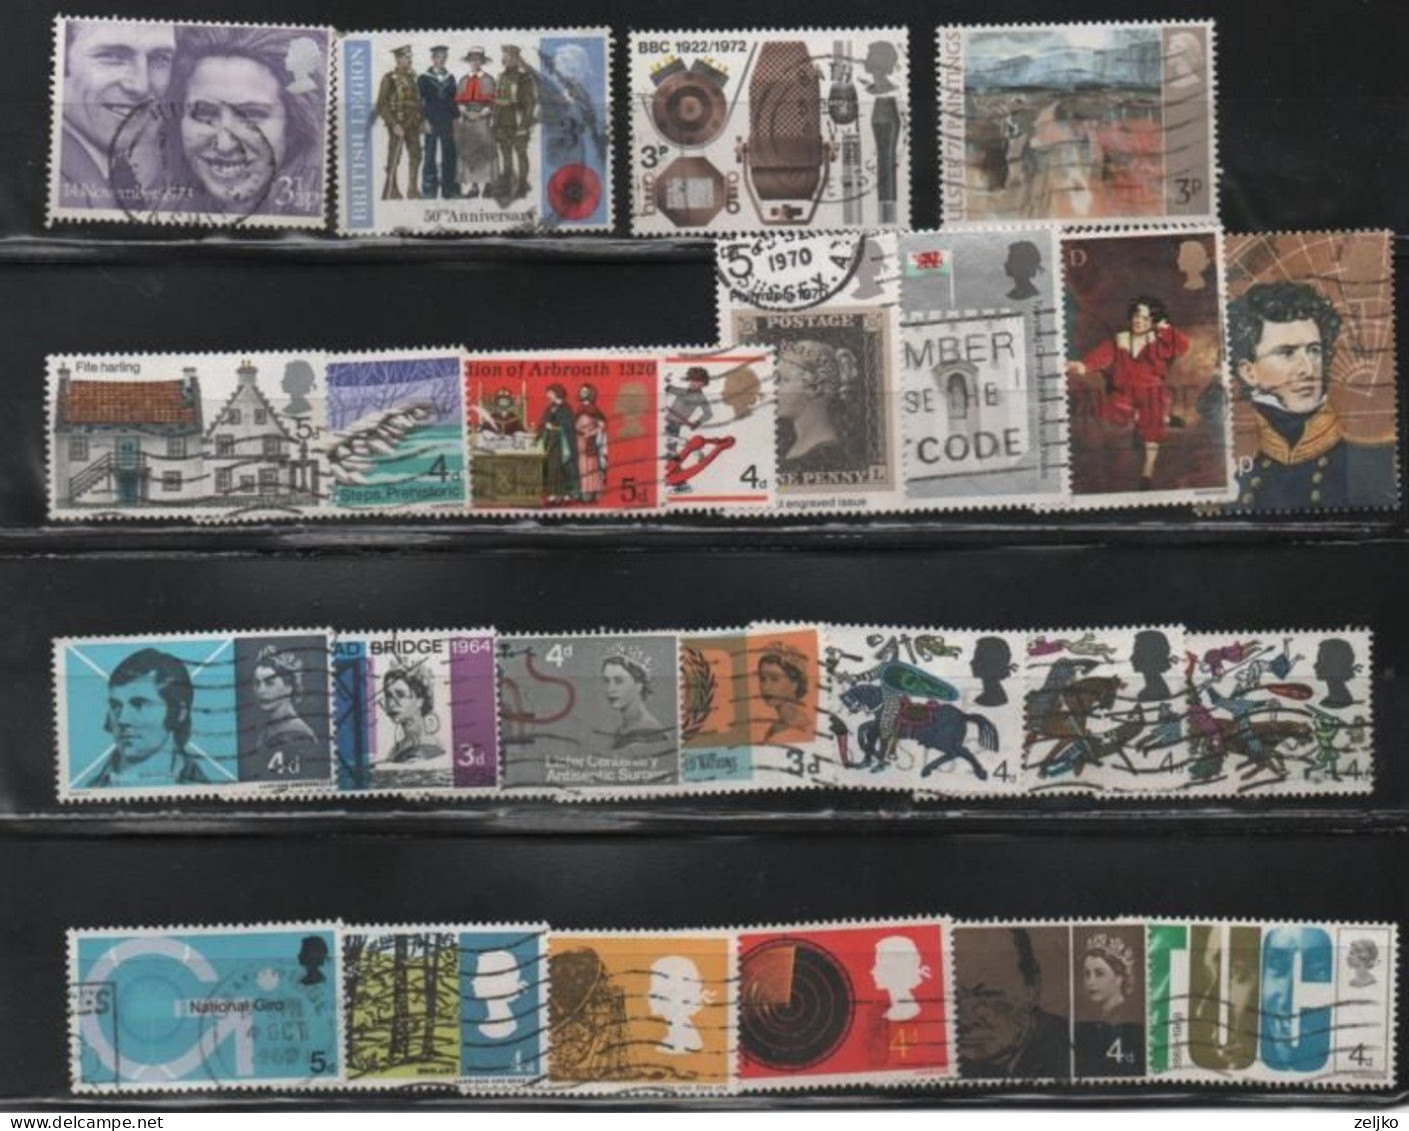 UK, GB, Great Britain, Lot Of 25 Used Stamps - Lots & Kiloware (mixtures) - Max. 999 Stamps